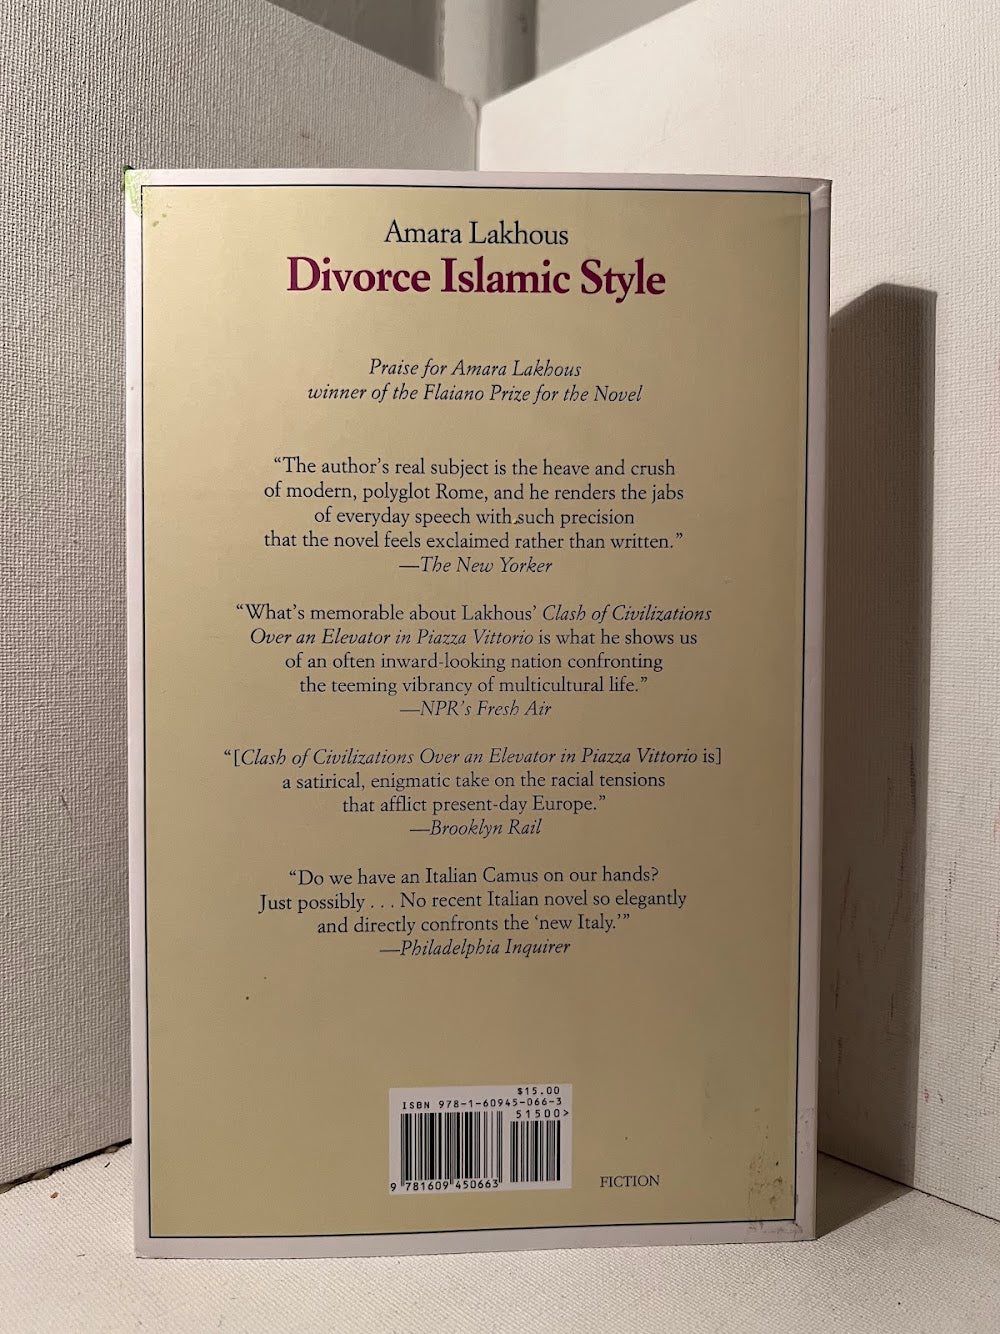 Divorce Islamic Style by Amara Lakhous